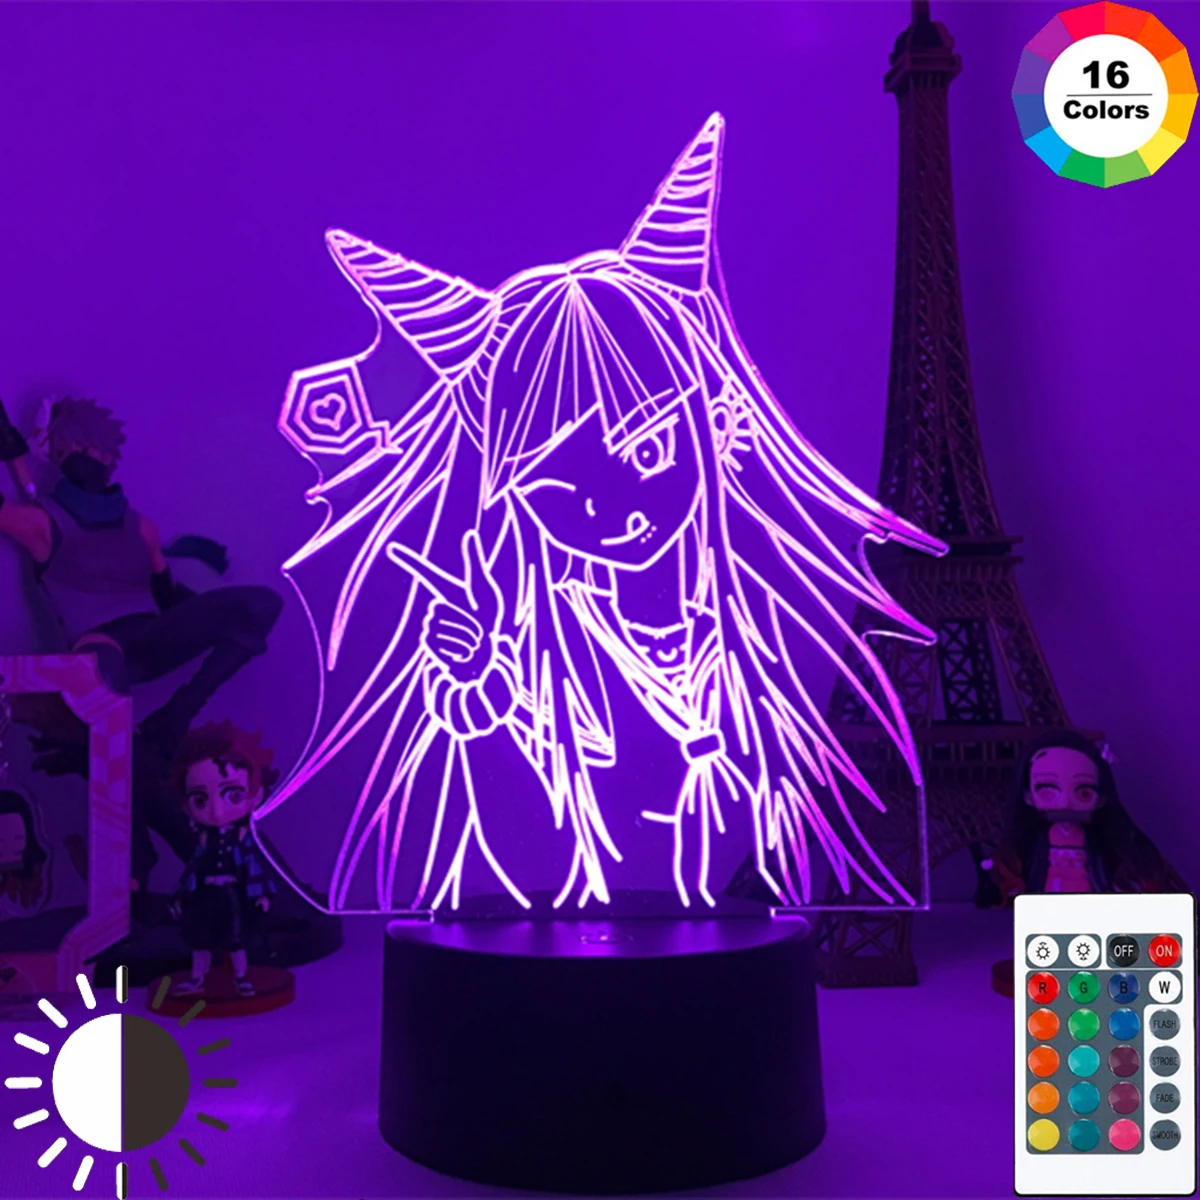 

Danganronpa Mioda Ibuki Led 3D USB Illusion Anime Lamp Lighting Color Changing Nightlights Lampara For Gift Toy model statue